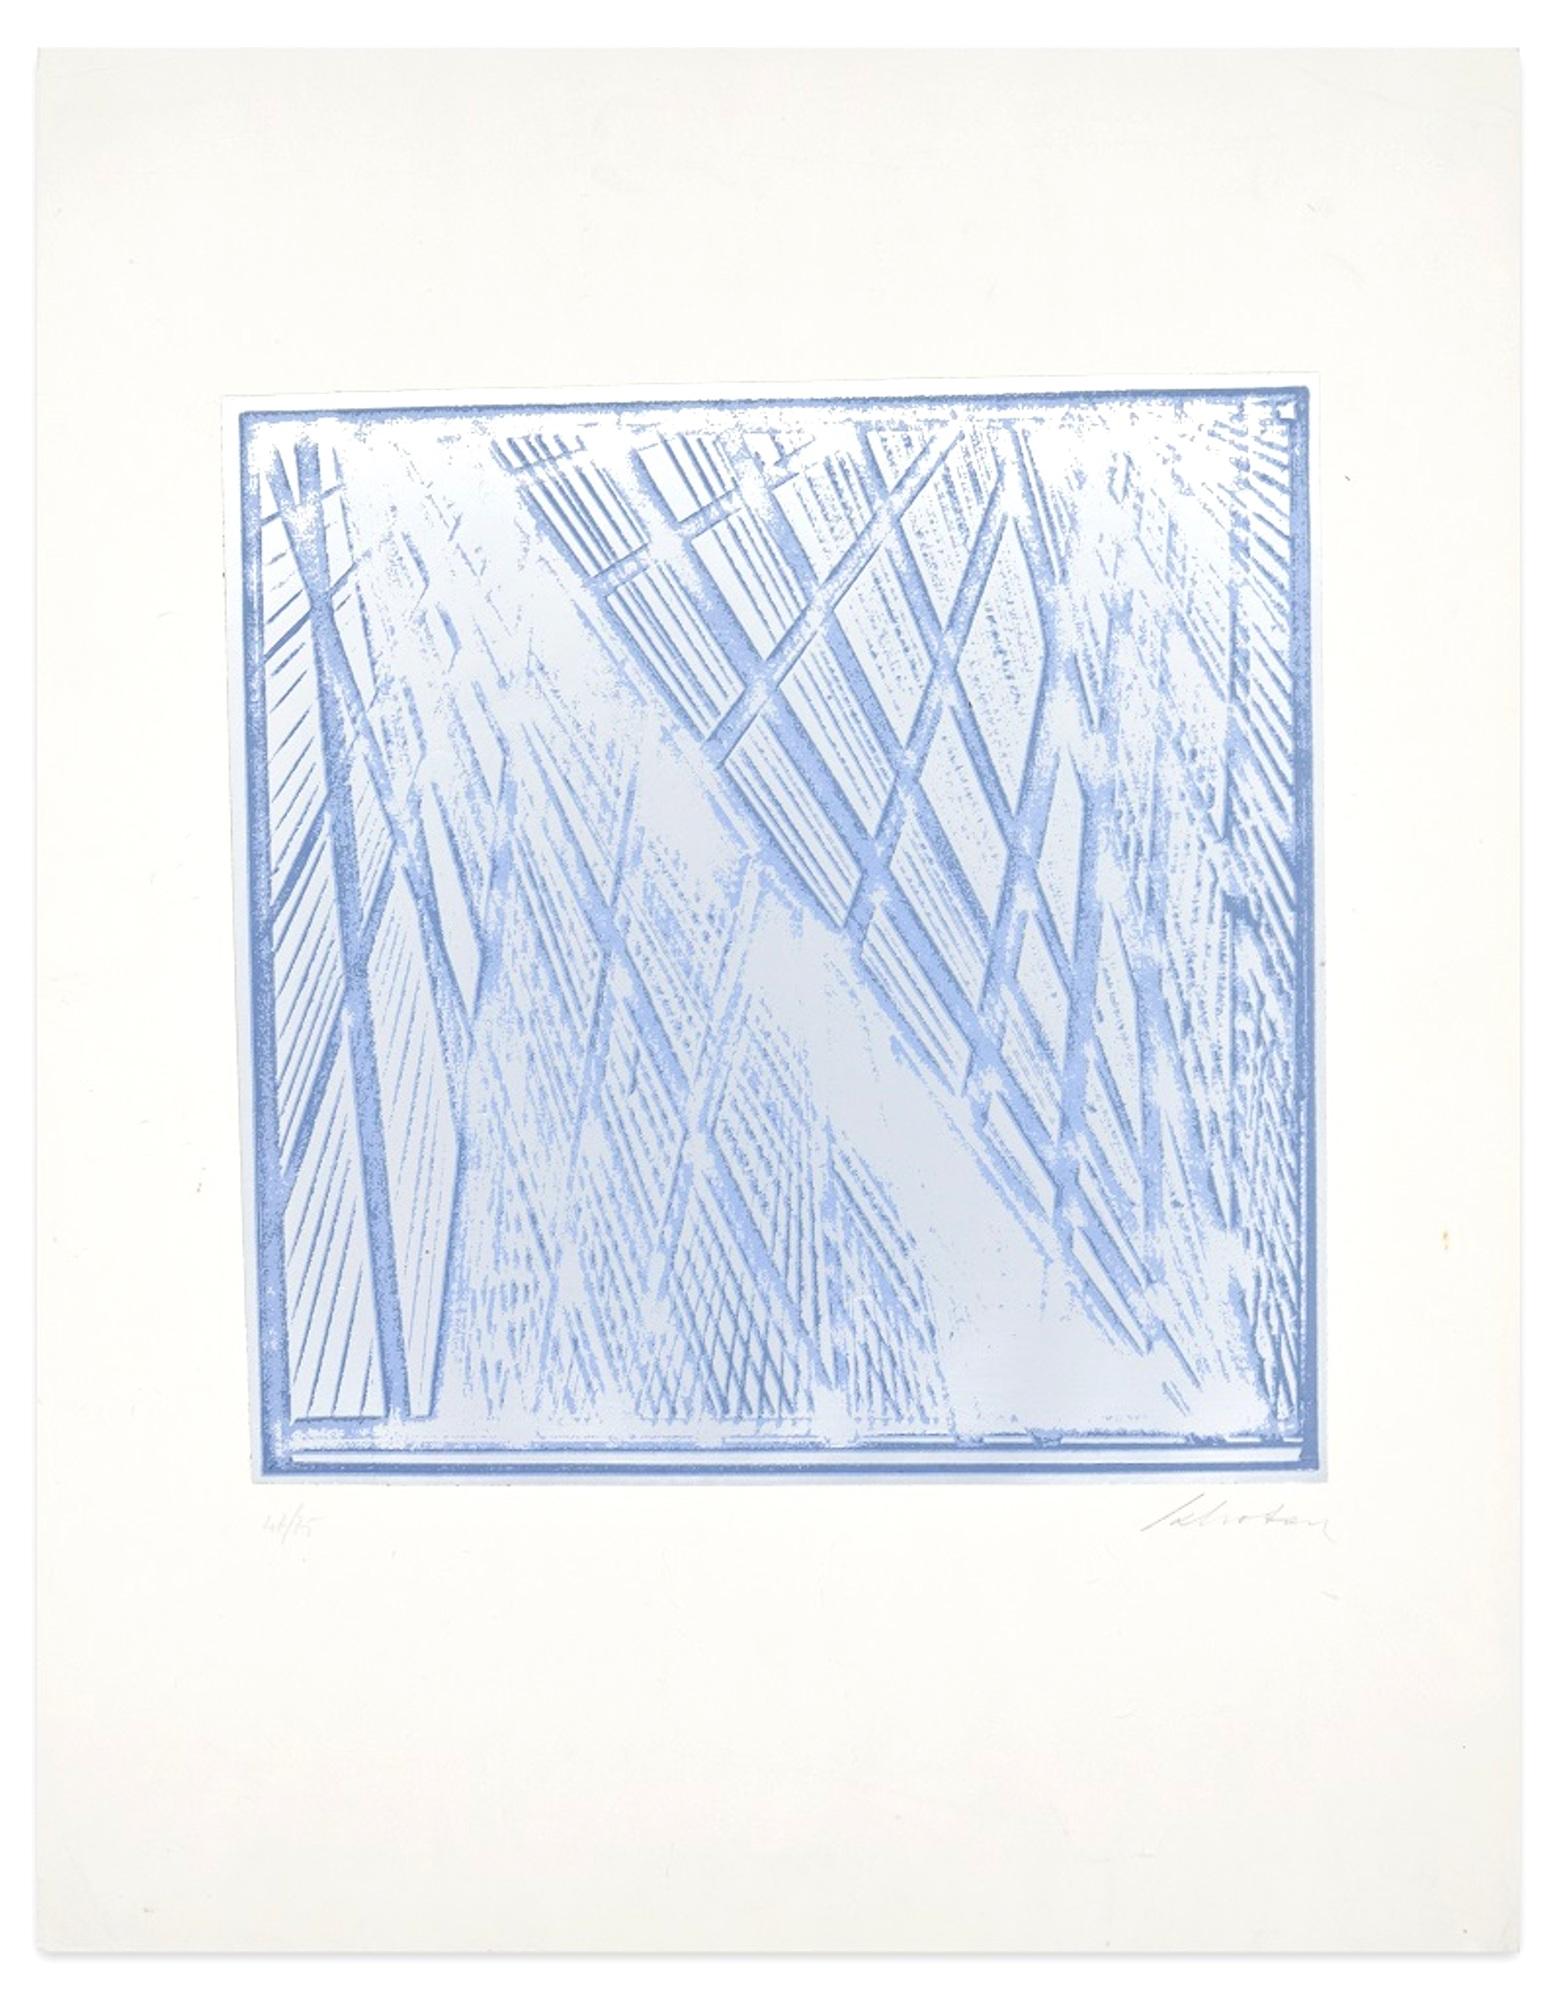 Untitled - Original Screen Print by G. Salvatori - 1970s - Gray Abstract Print by Giuseppe Salvatori